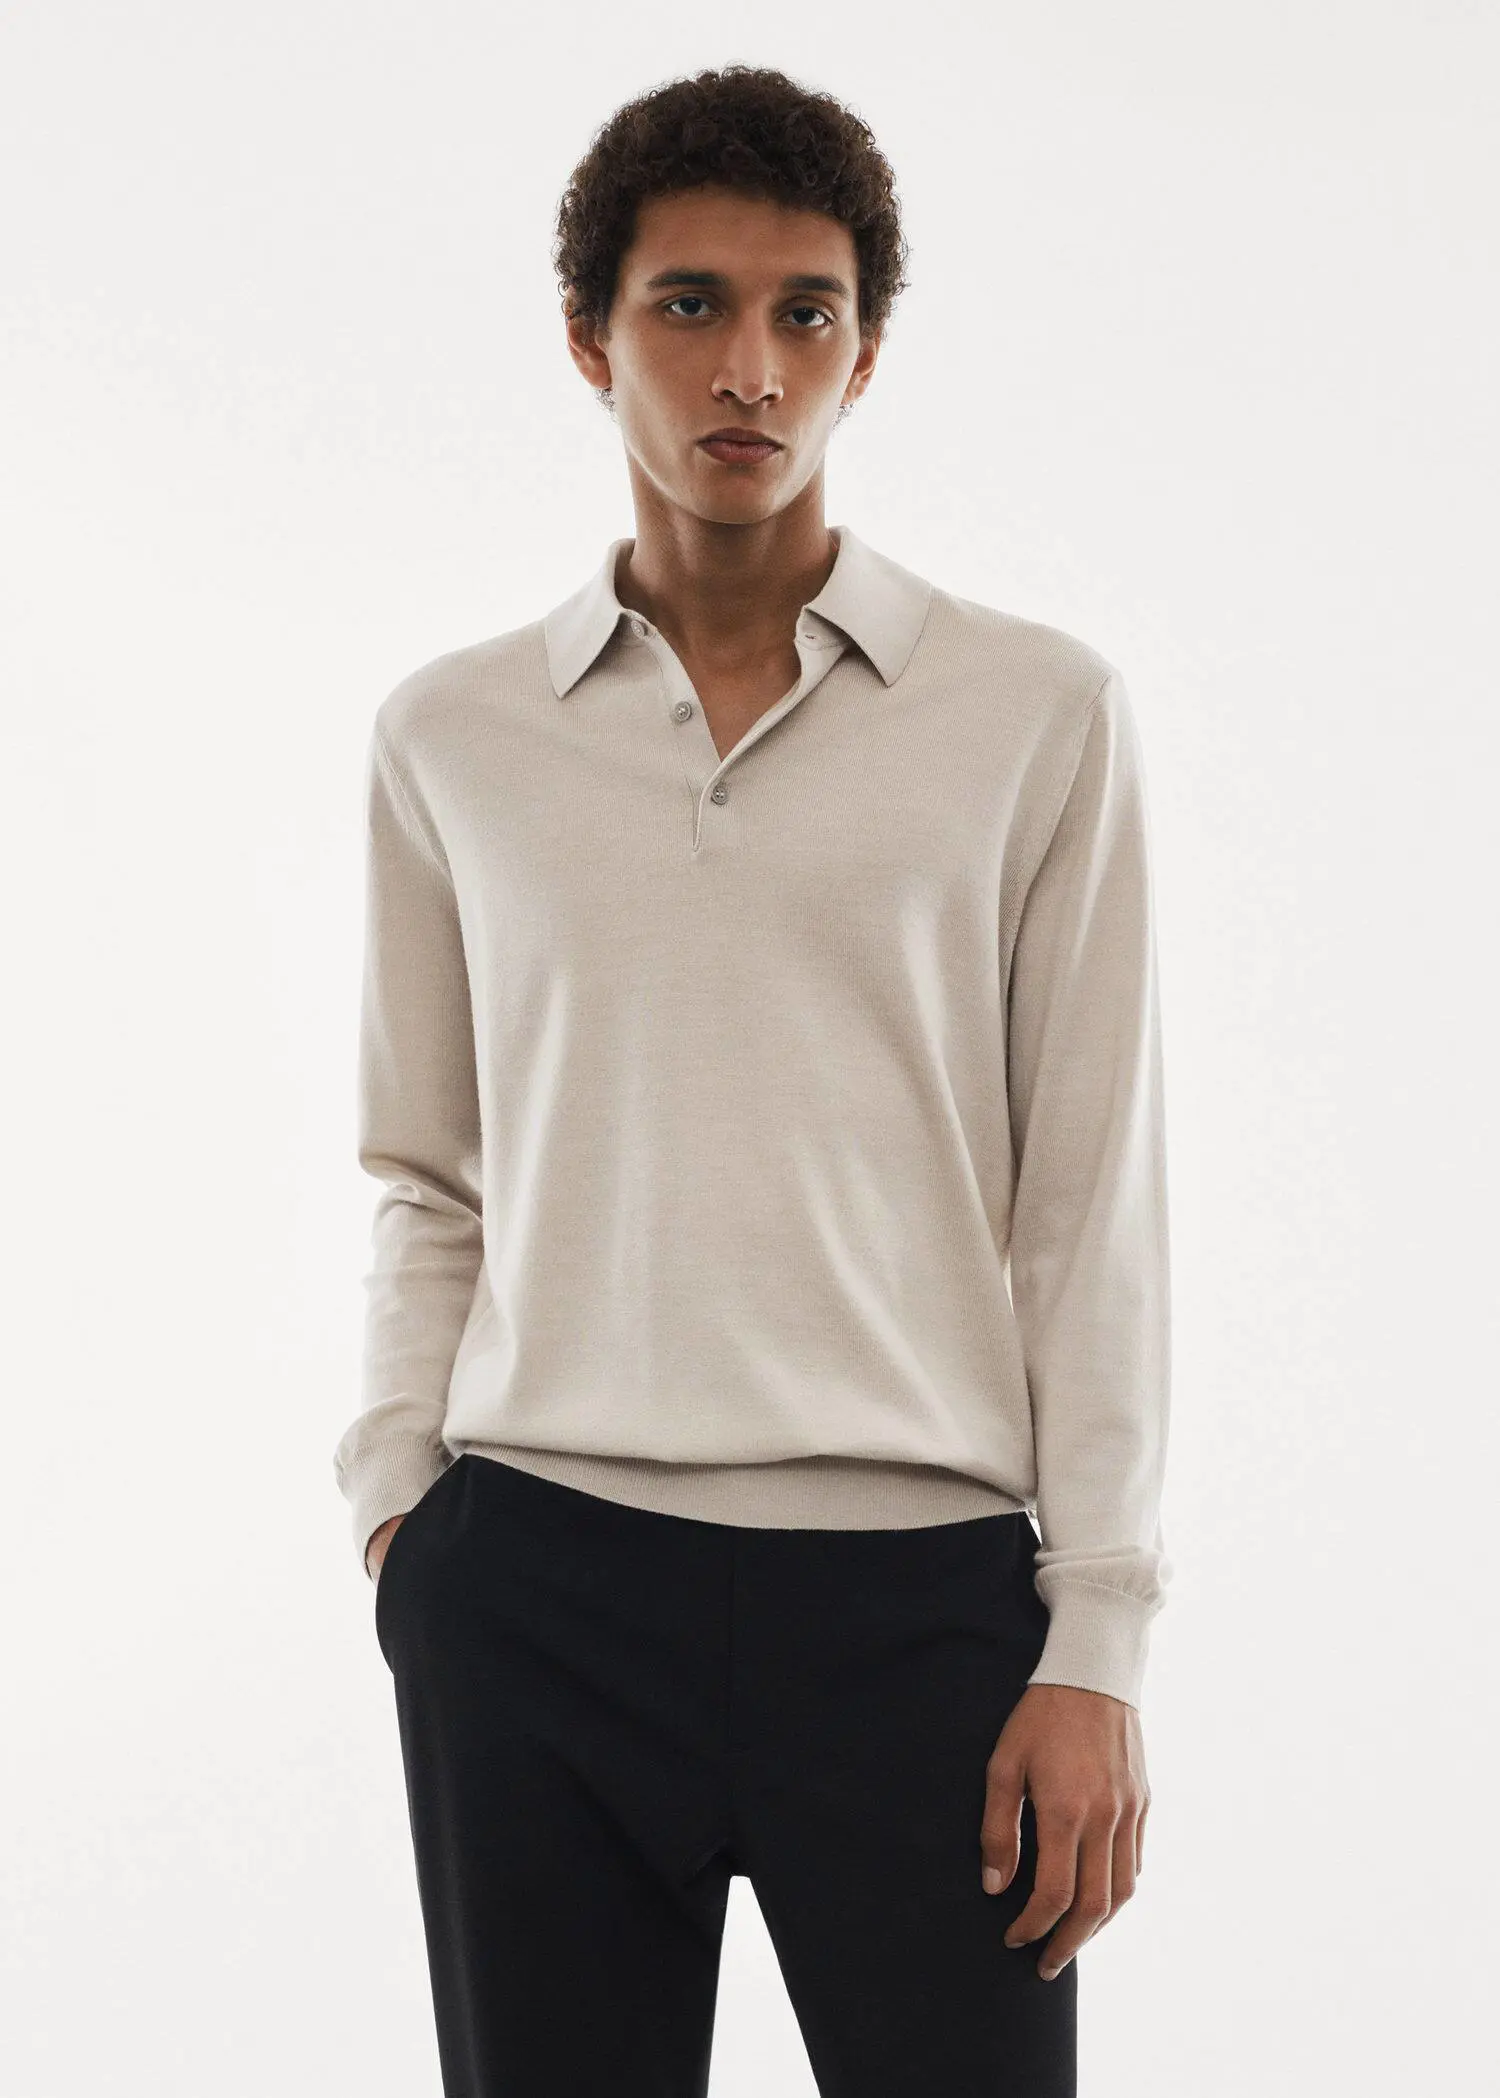 Mango 100% merino wool long- sleeved polo shirt. 2